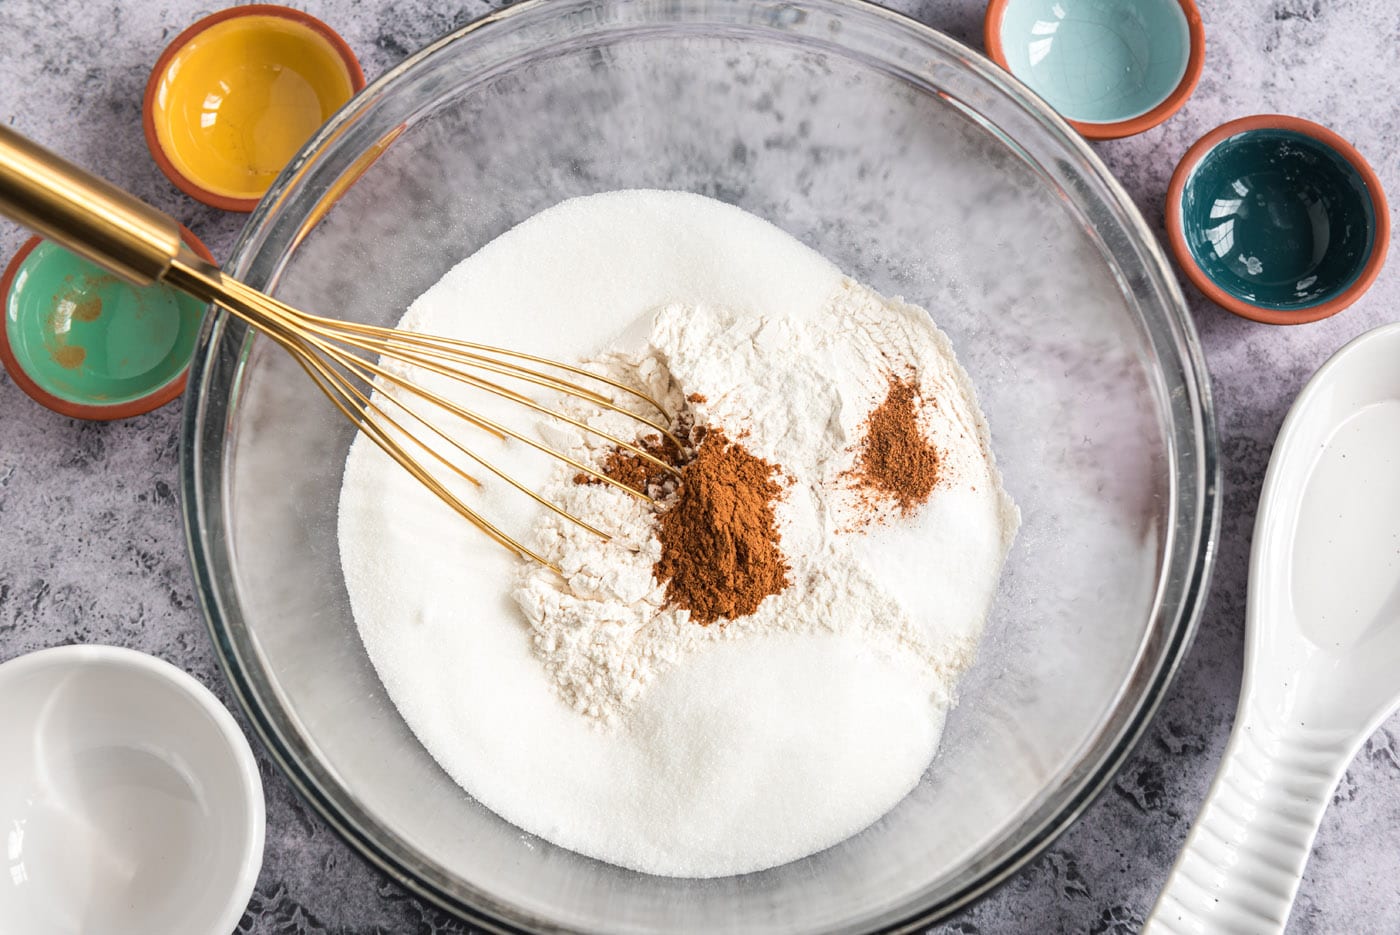 sugar, cinnamon, flour, nutmeg, and baking powder in a bowl with a whisk